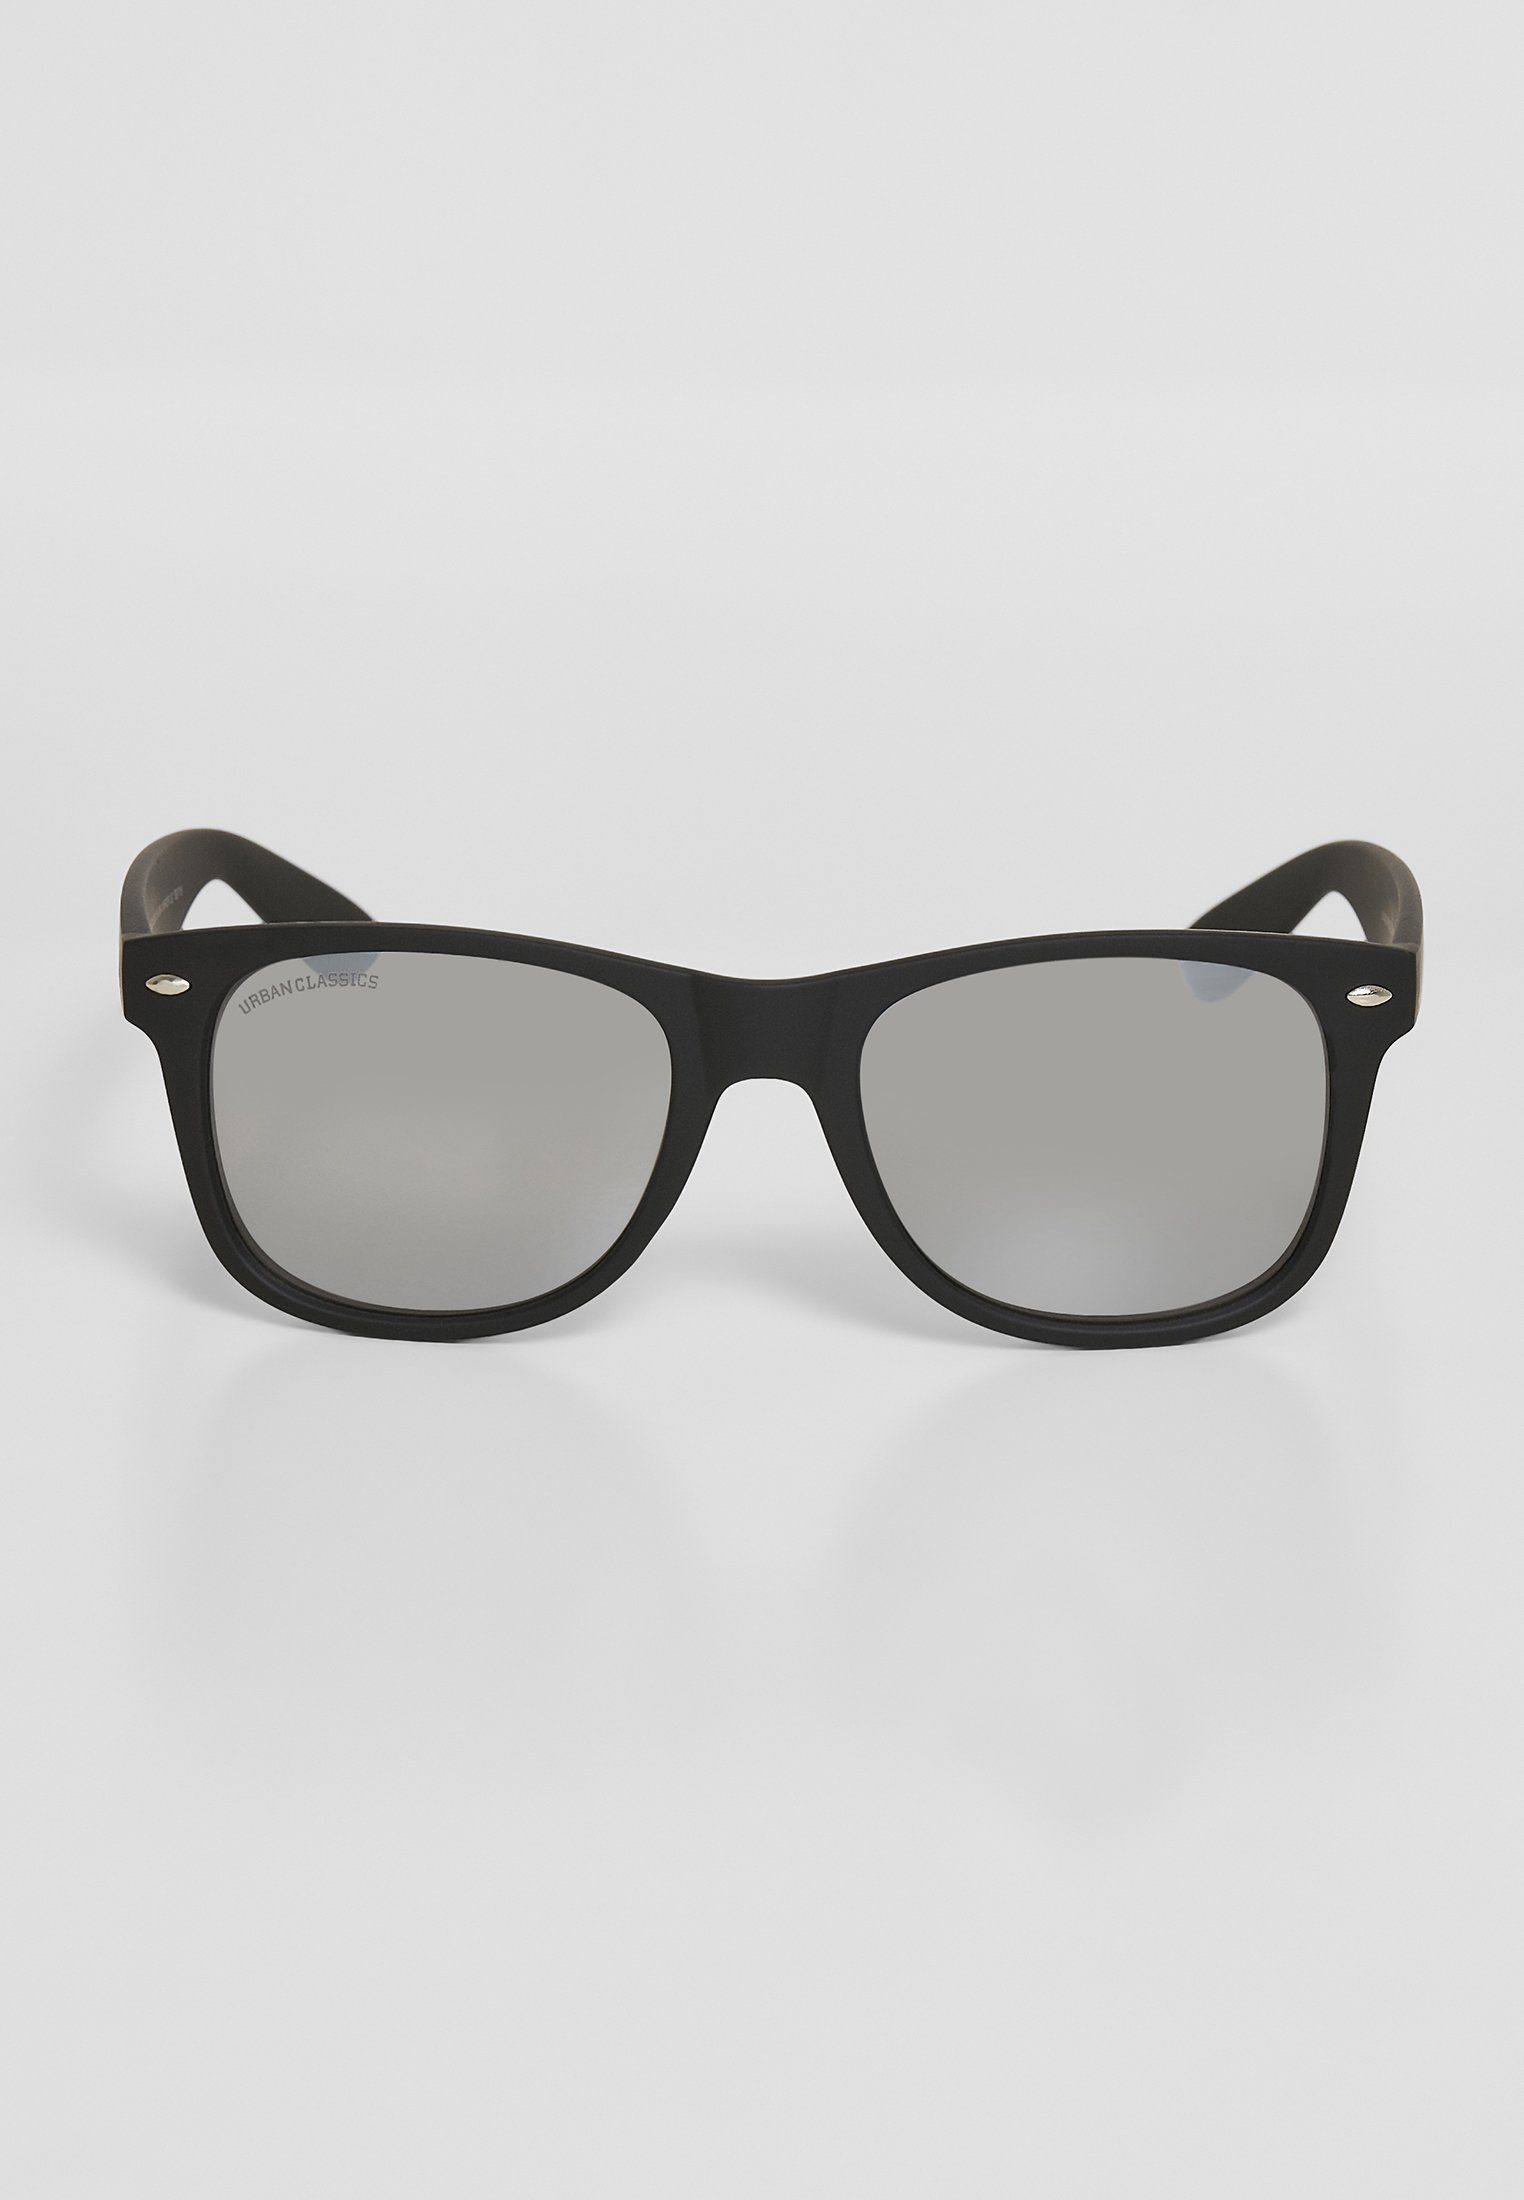 Sonnenbrille URBAN Sunglasses CLASSICS UC black/silver Mirror Accessoires Likoma